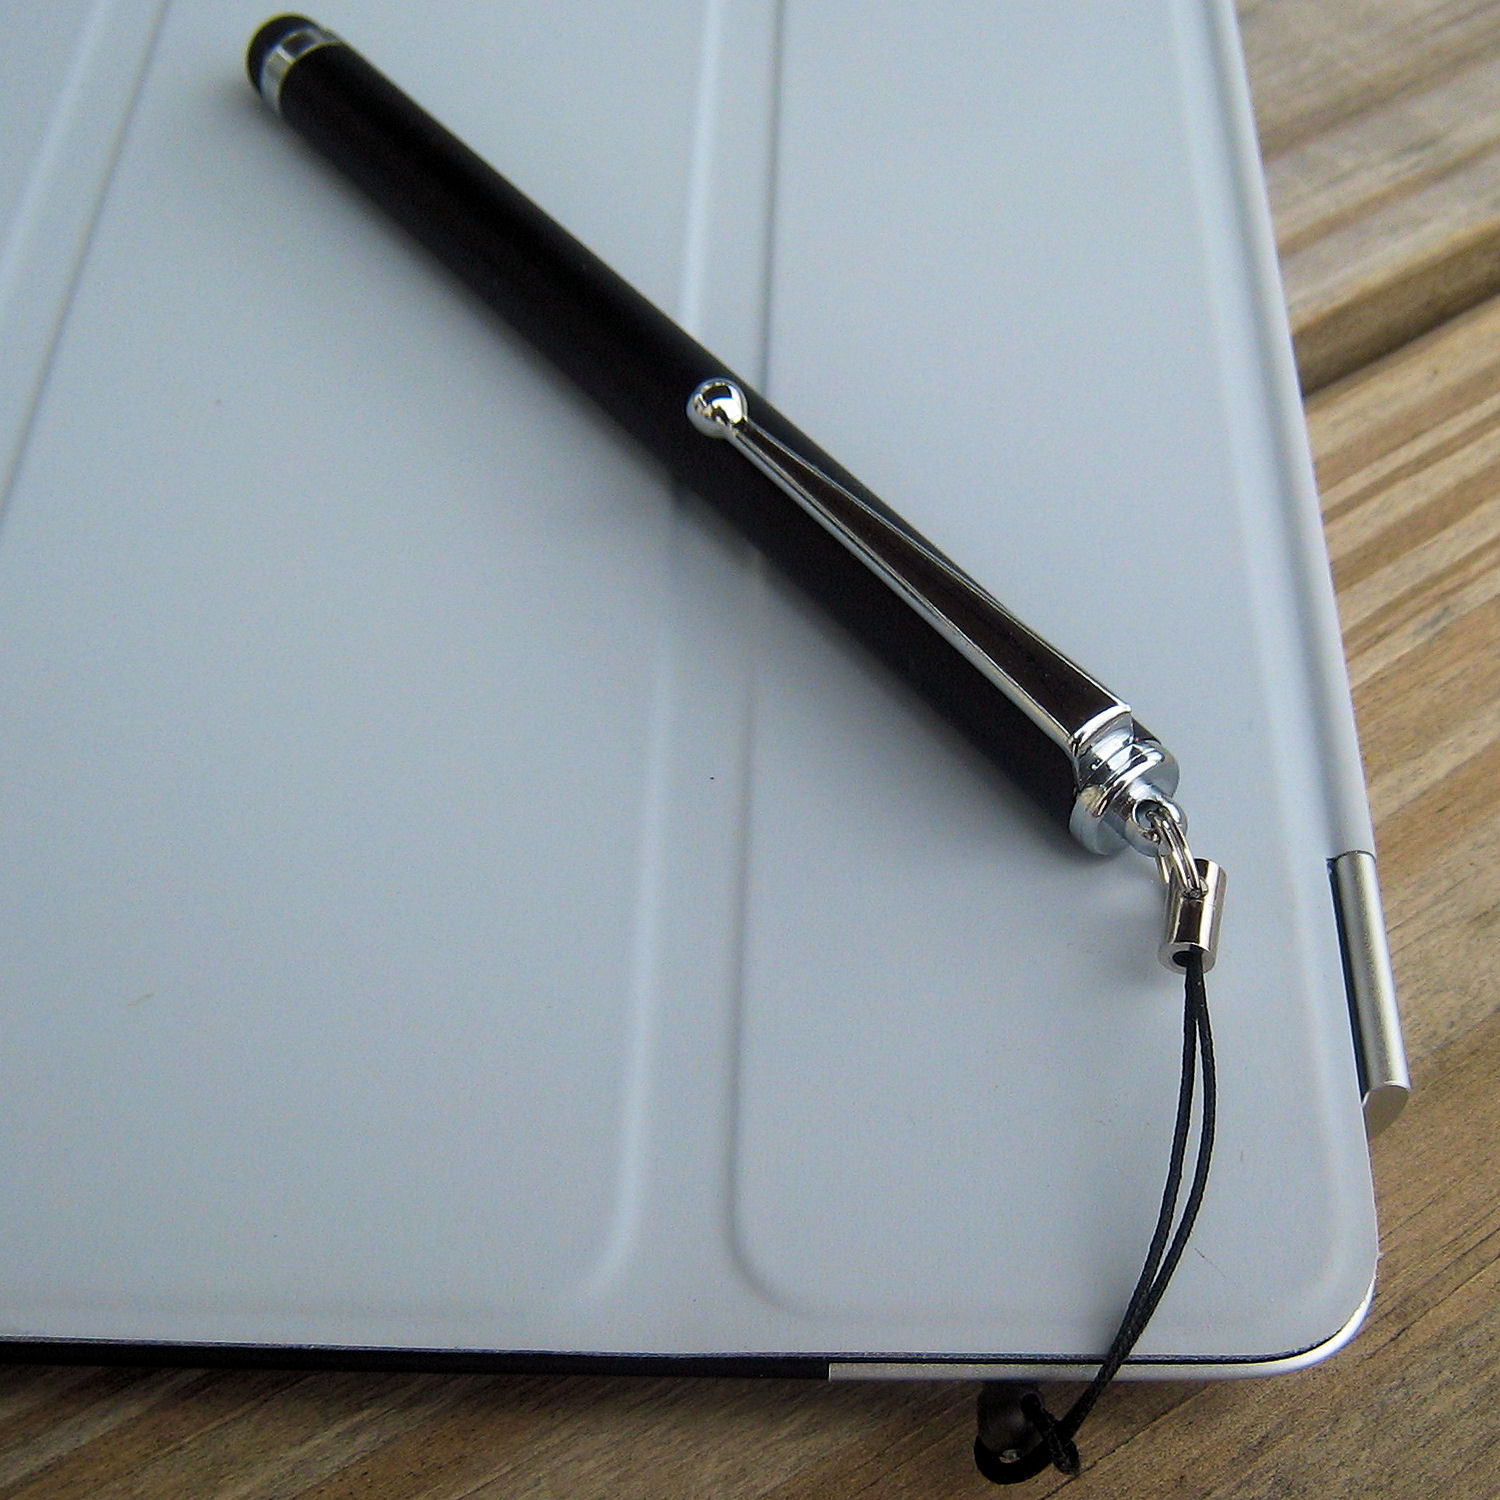 Gomadic Precision Tip Capacitive Stylus Pen designed for the LG G2x (Black Color) - Lifetime Warranty